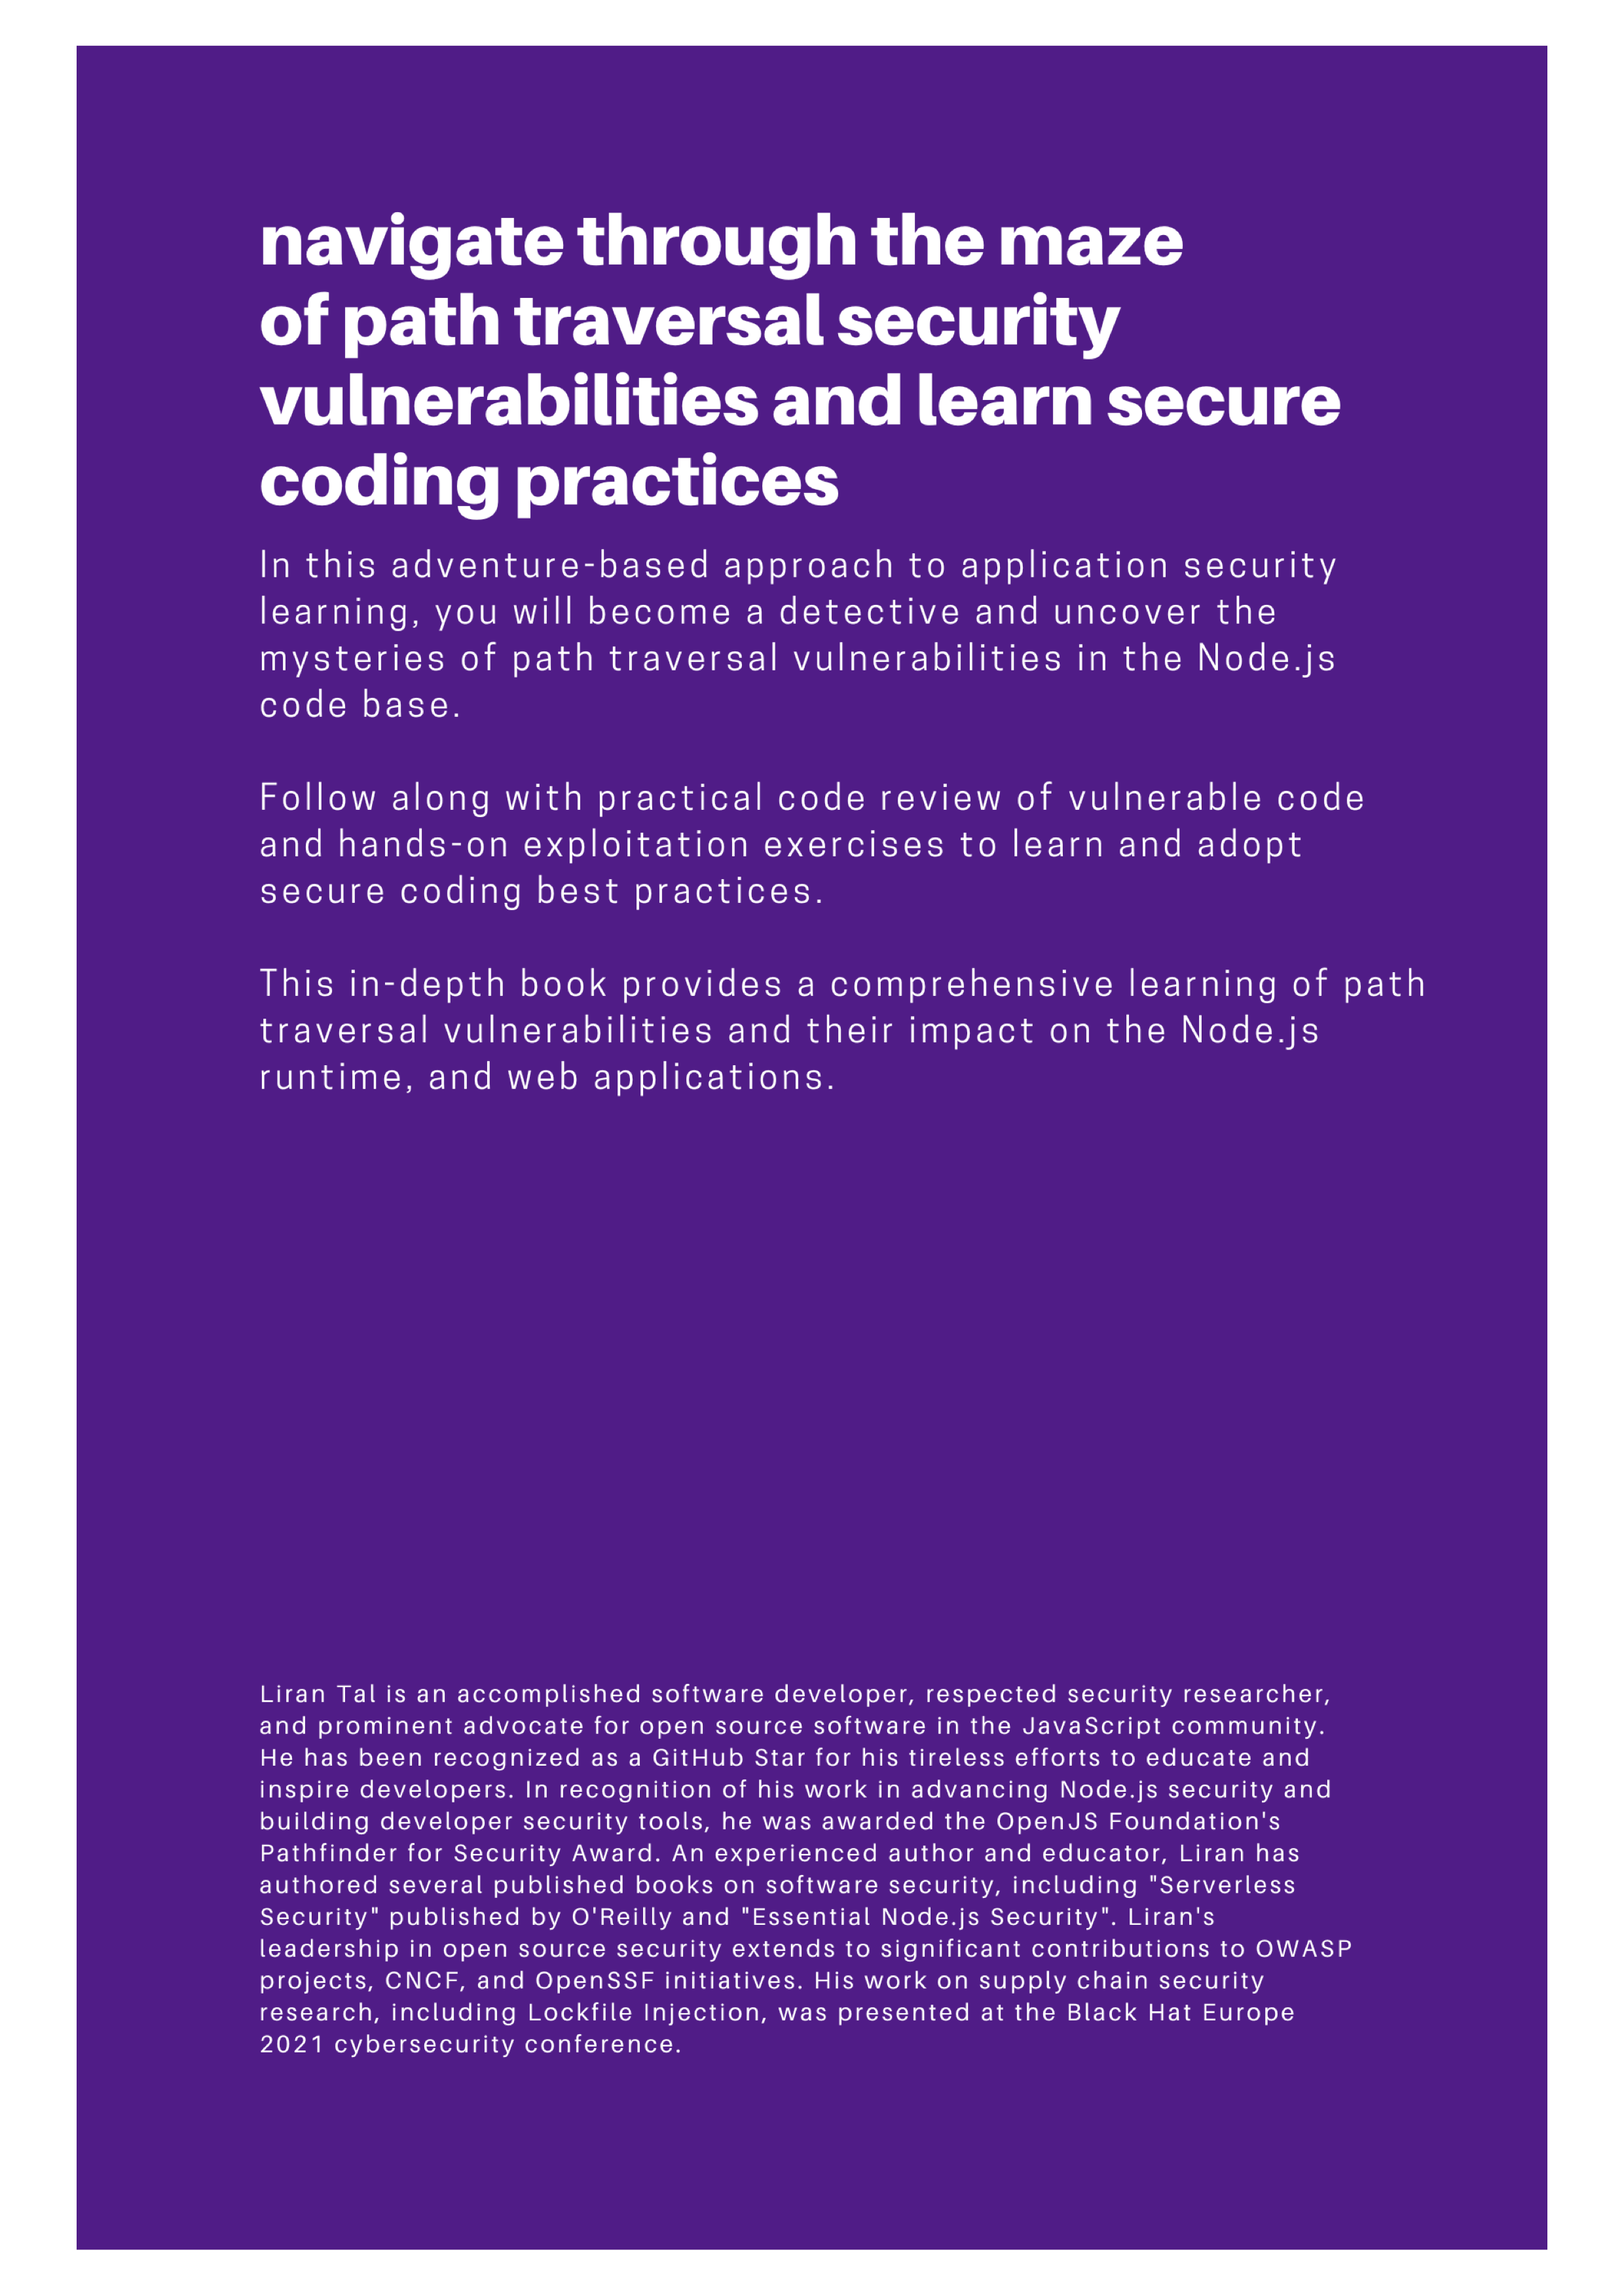 Path Traversal vulnerability book back cover